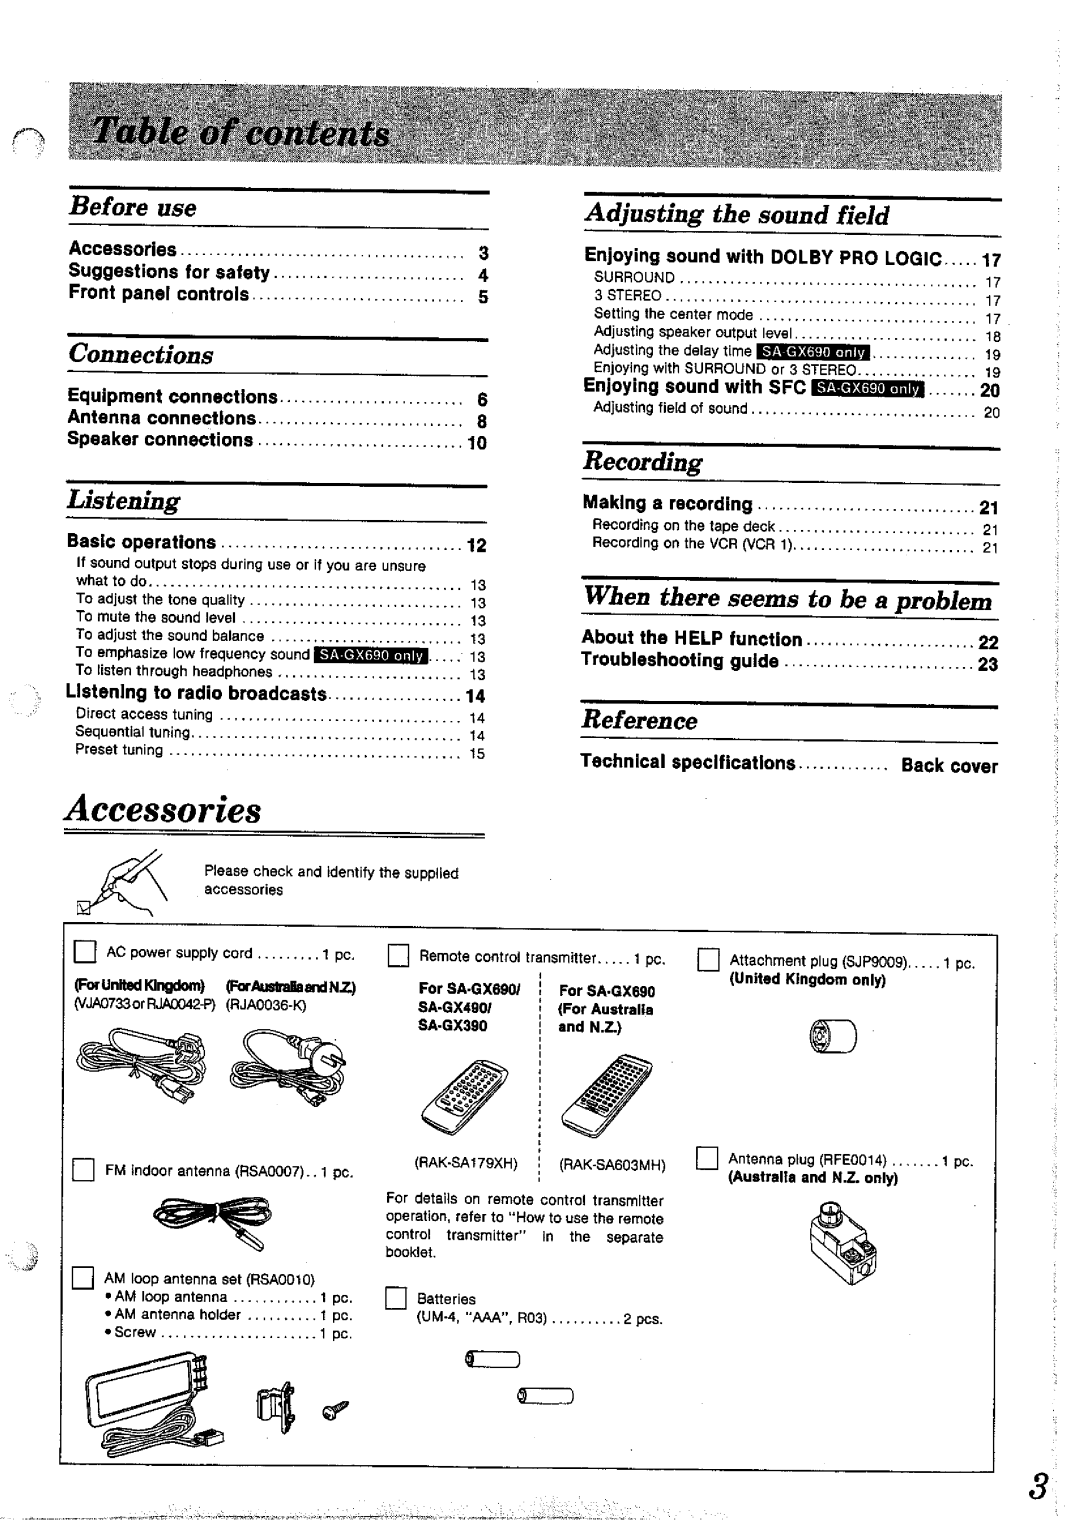 Panasonic SAGX690, SAGX490, SAGX390 manual 